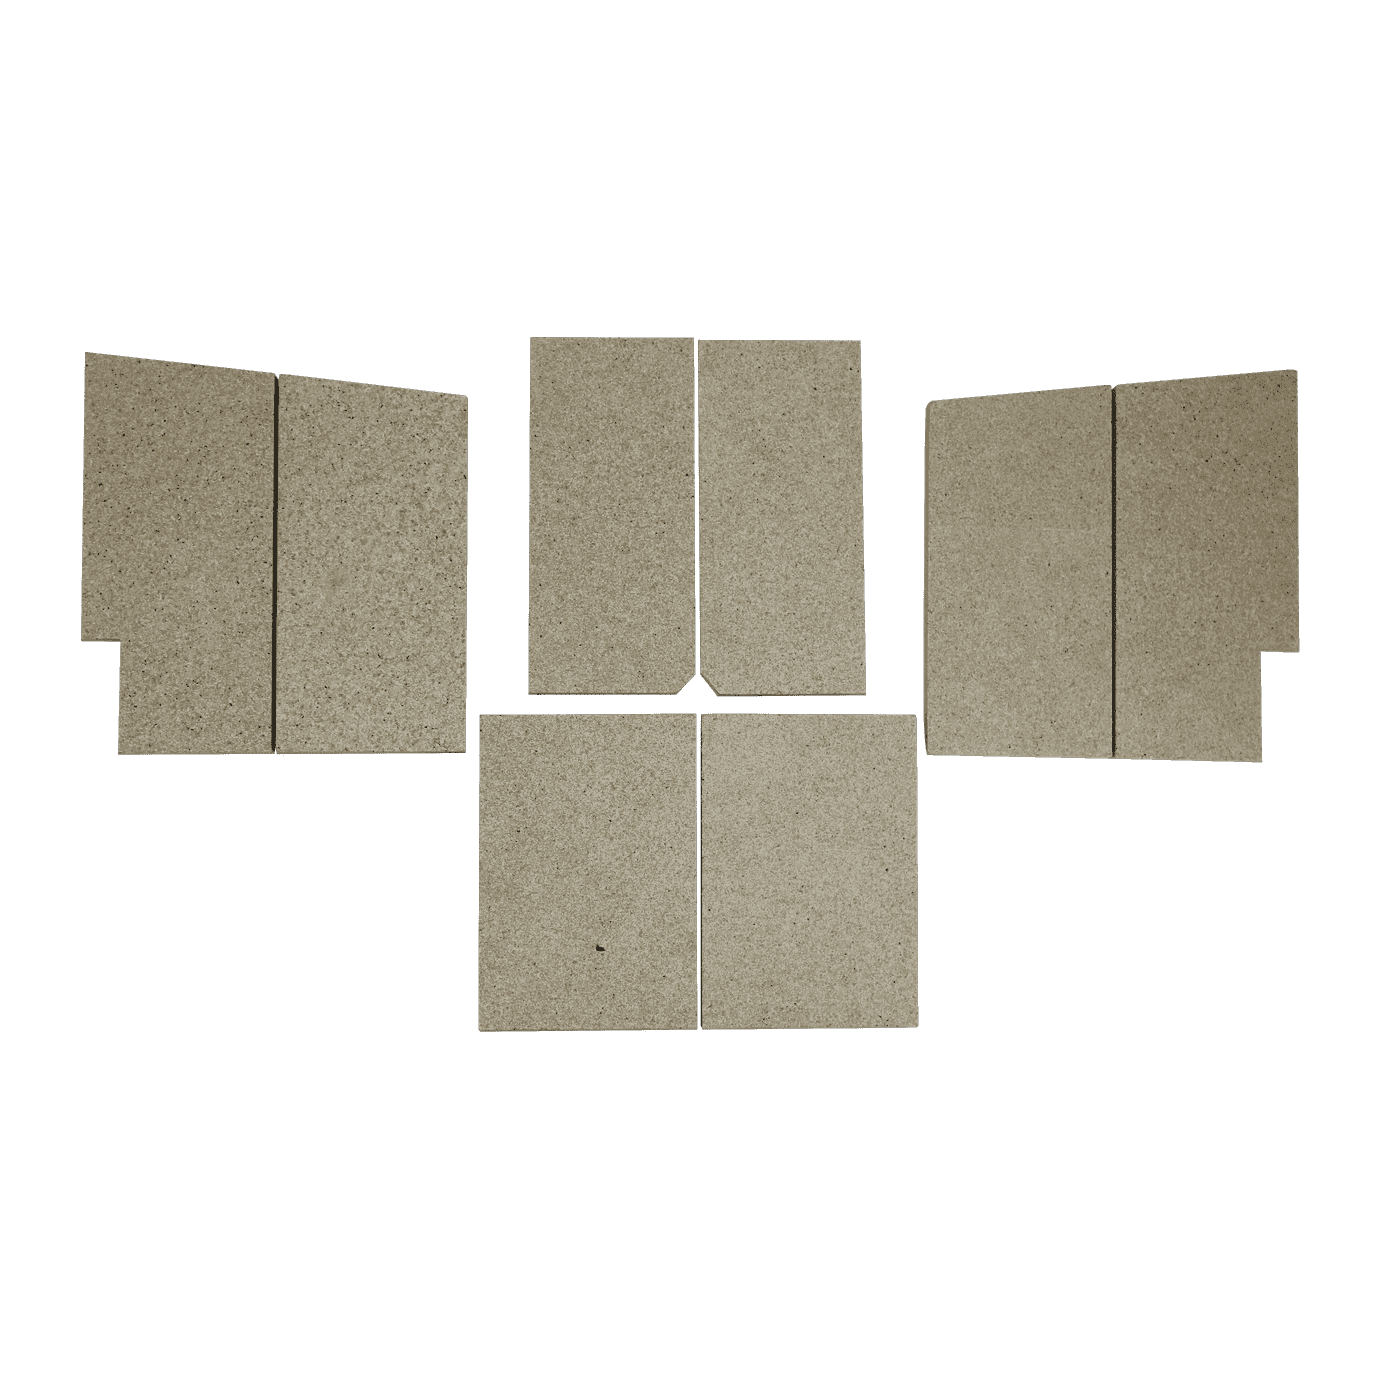 CB-8001 Ceramic Fire Board – Cubic Mini Wood Stoves